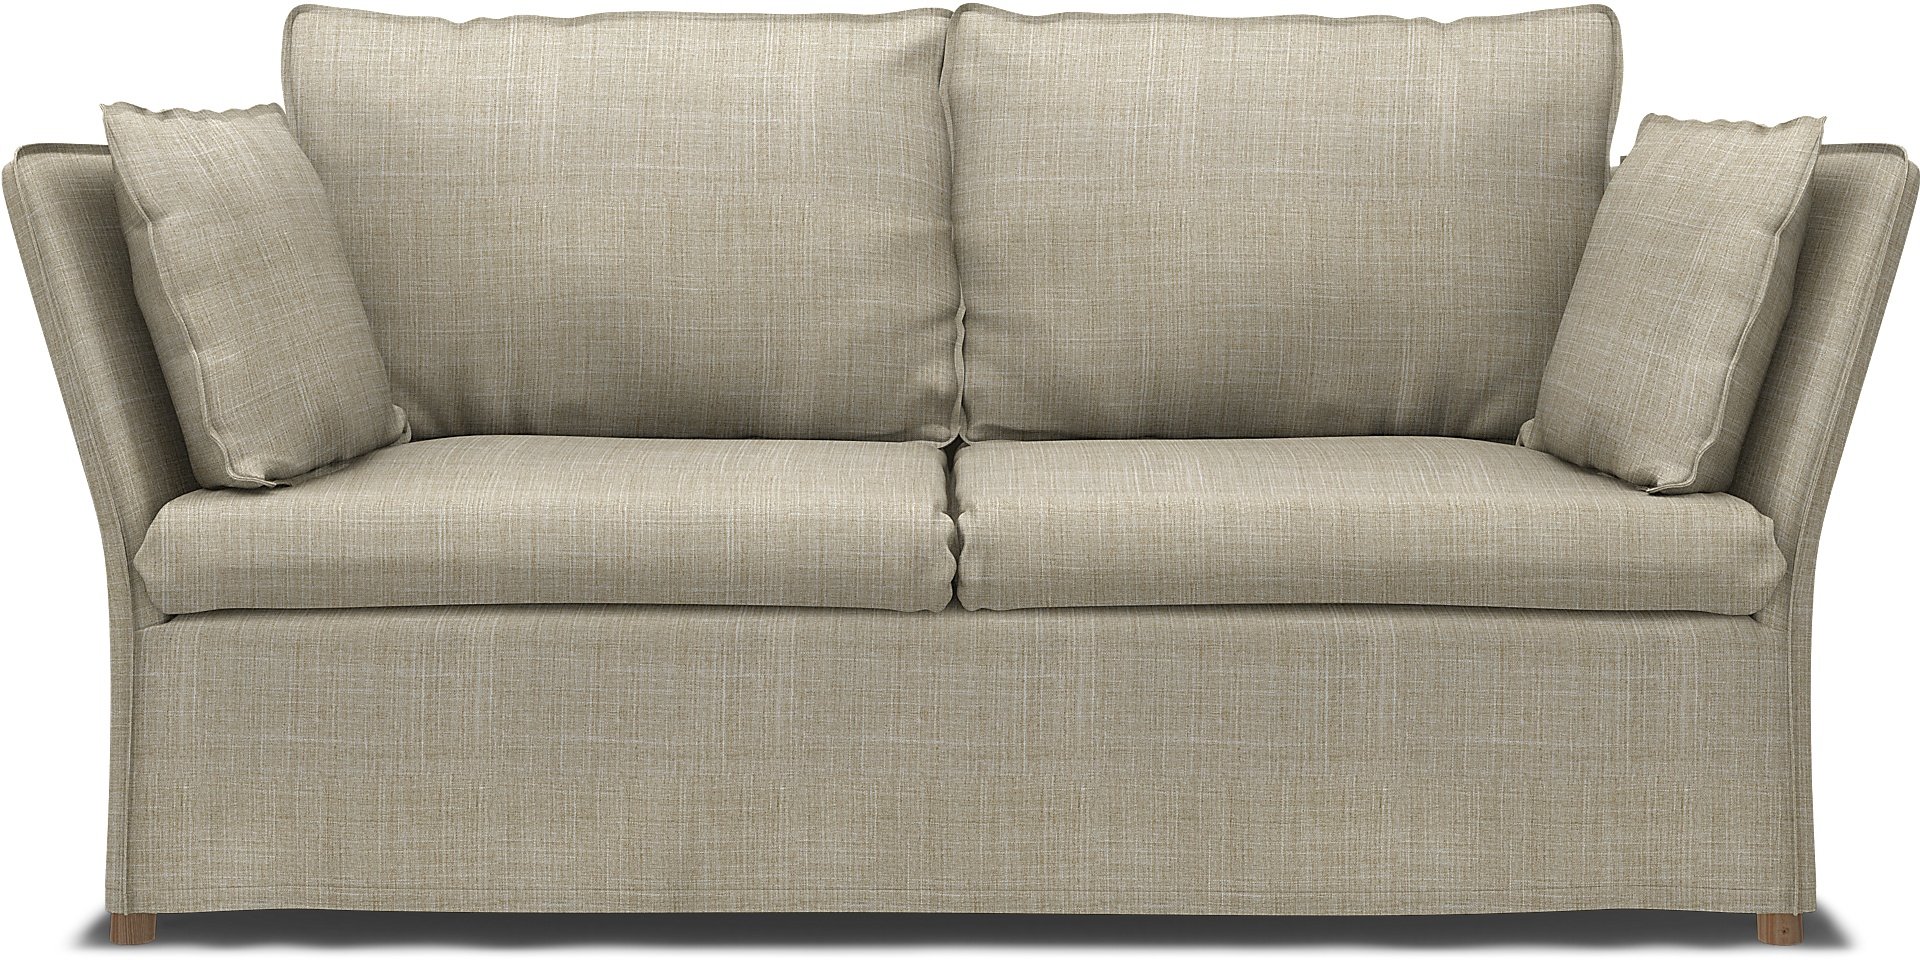 IKEA - Backsalen 2 seater sofa, Sand Beige, Boucle & Texture - Bemz